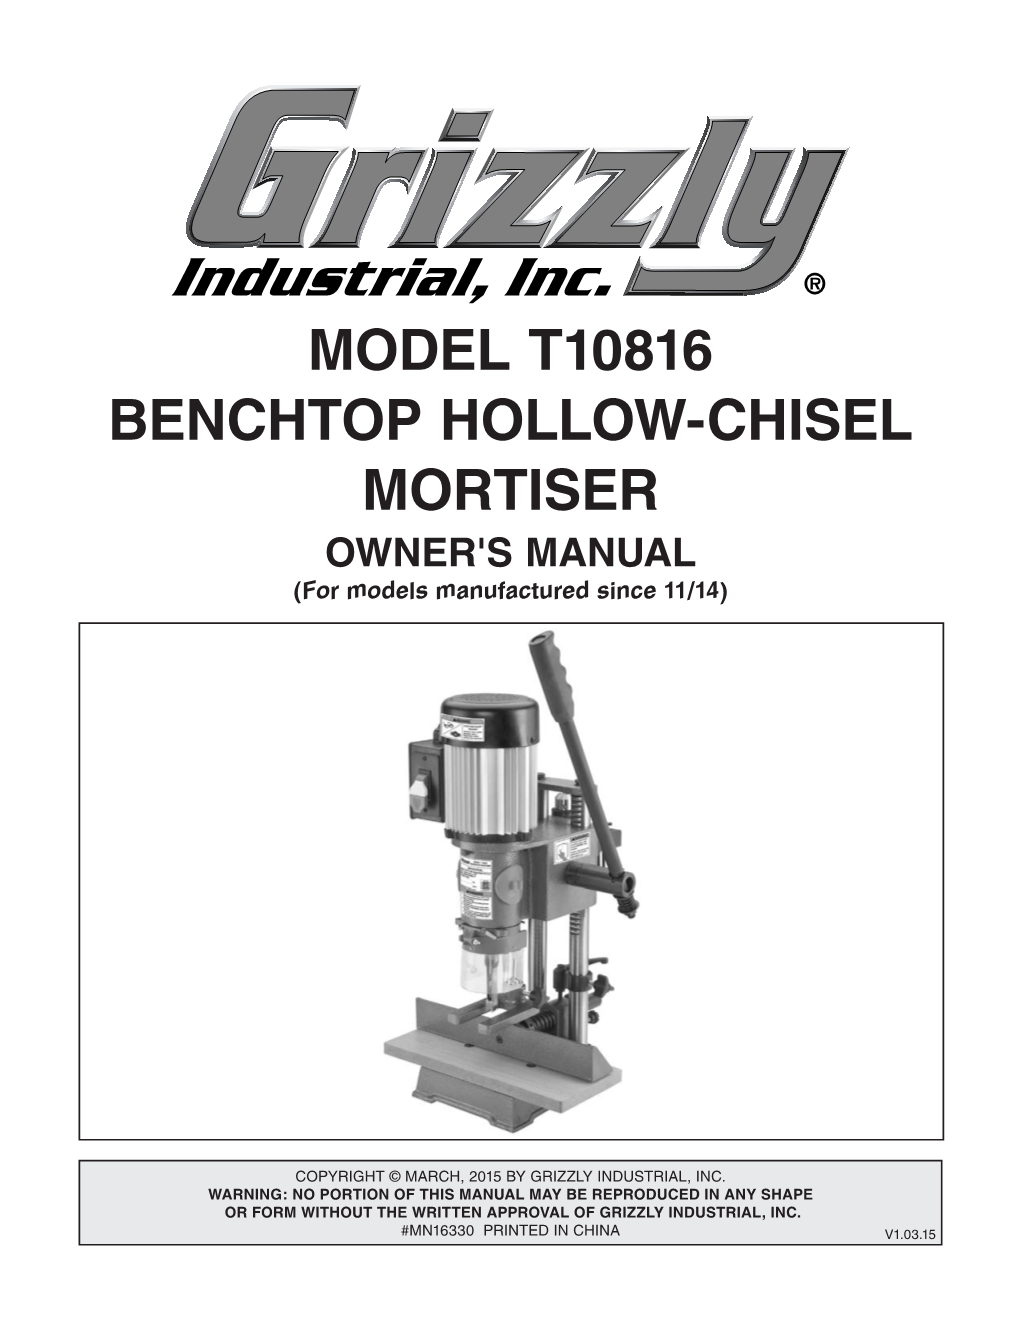 MODEL T10816 BENCHTOP HOLLOW-CHISEL MORTISER OWNER's MANUAL (For Models Manufactured Since 11/14)